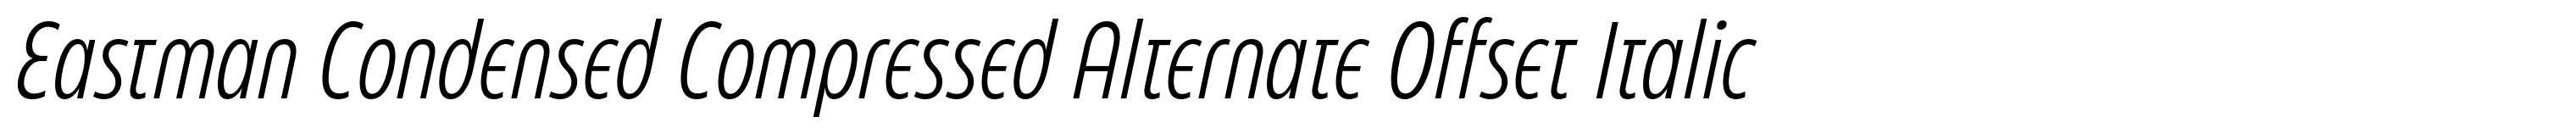 Eastman Condensed Compressed Alternate Offset Italic